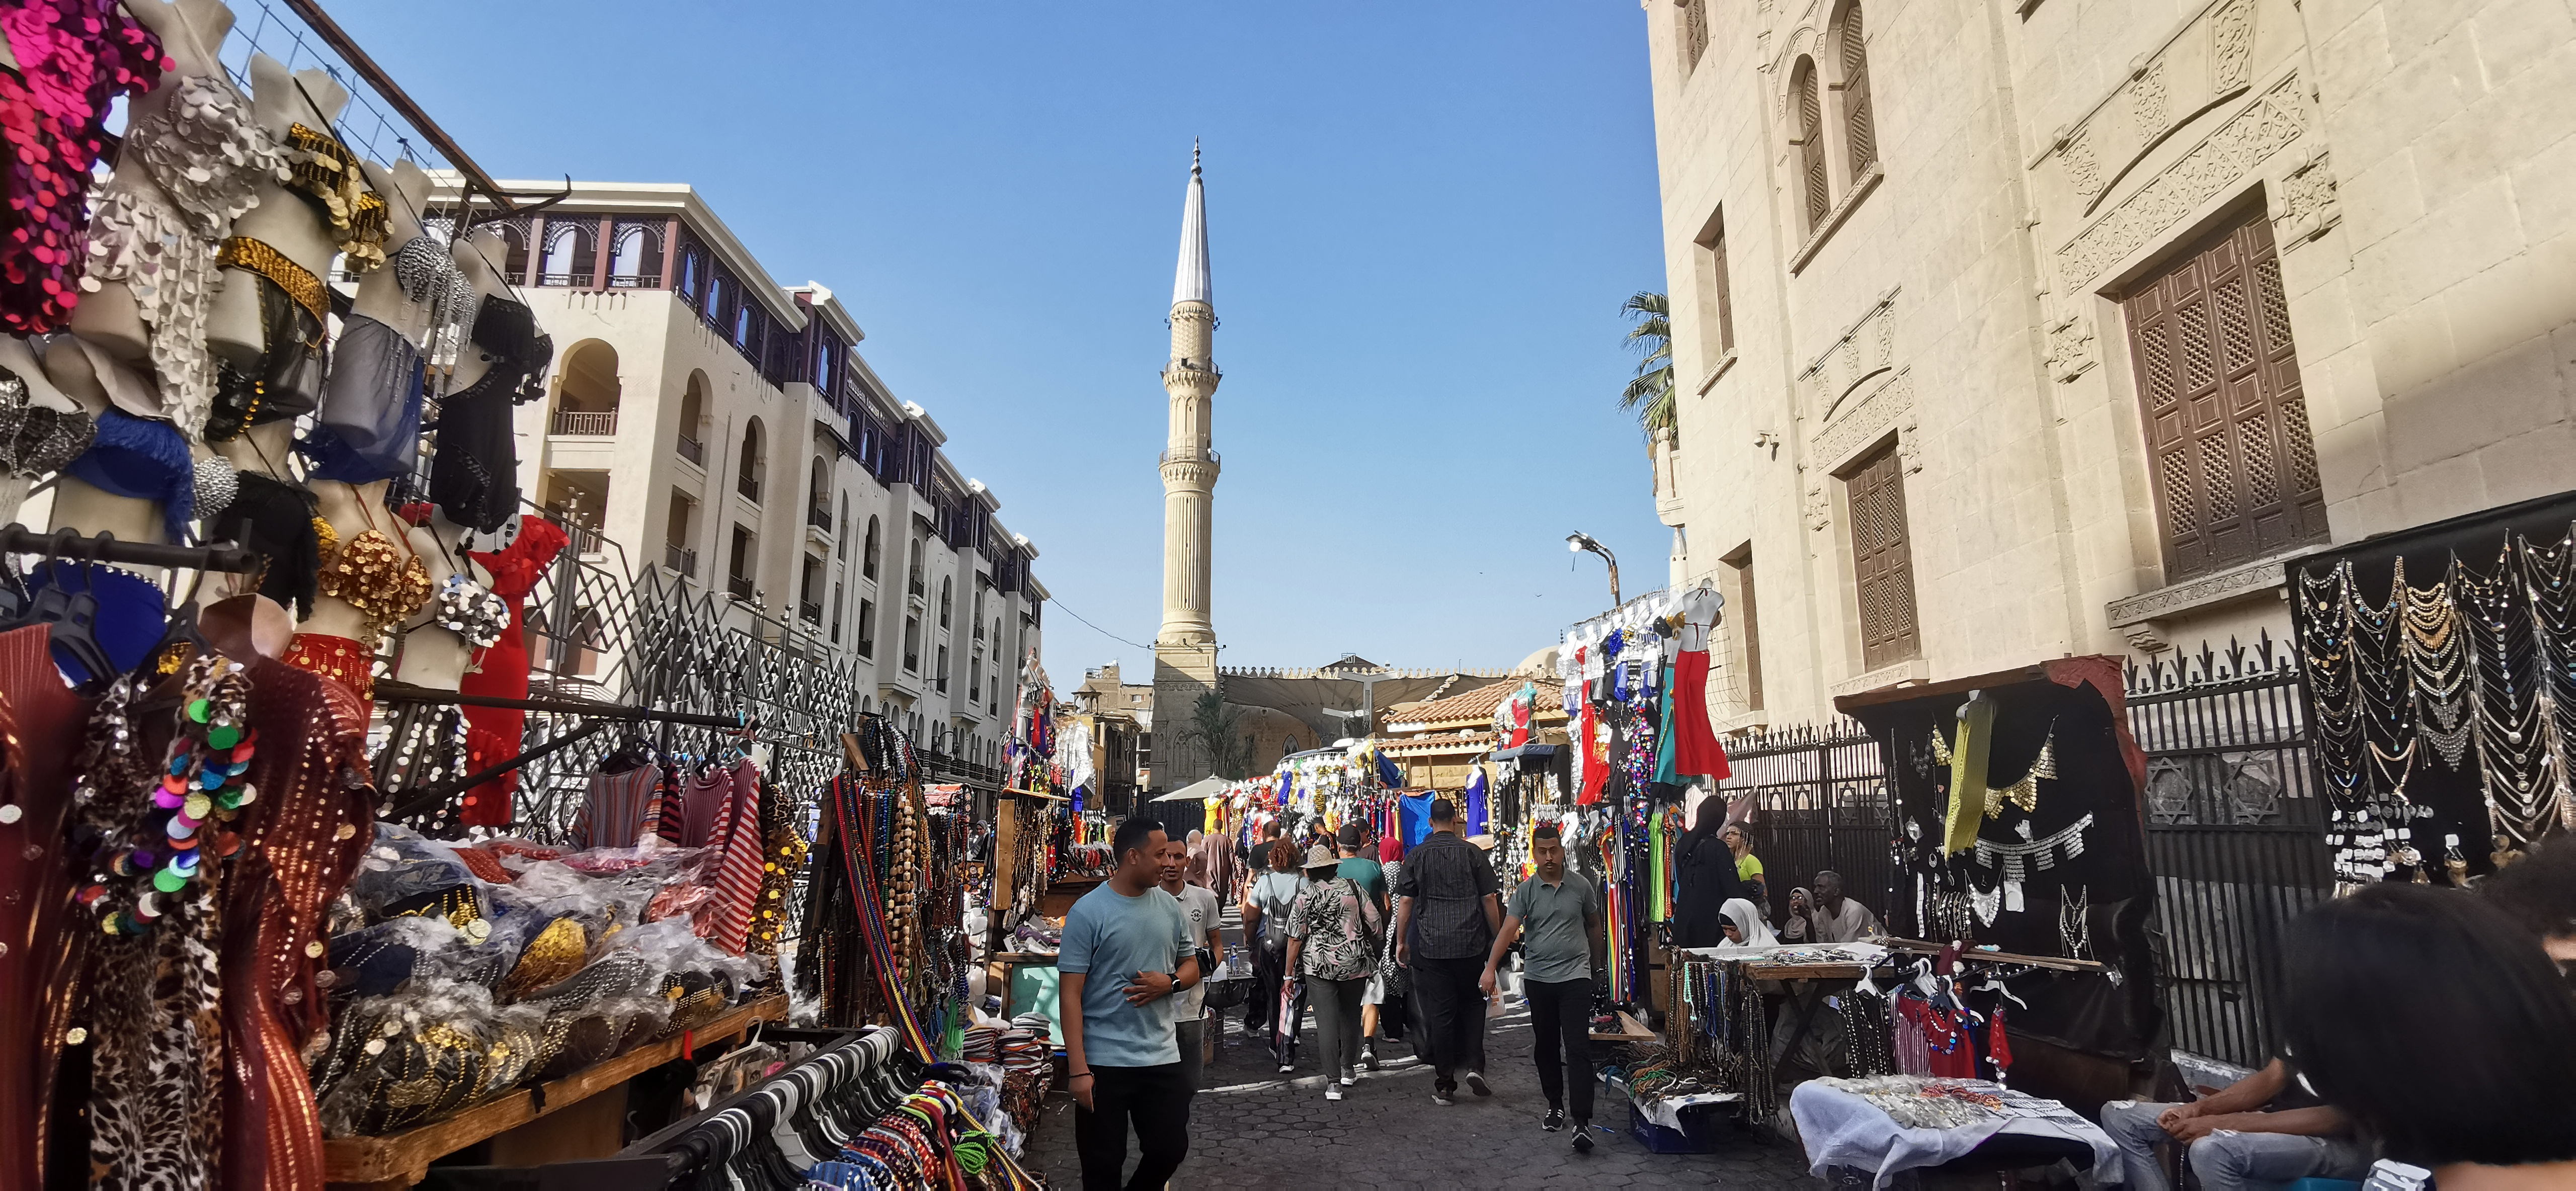 People visit the Khan El-Khalili market in Cairo. /CGTN